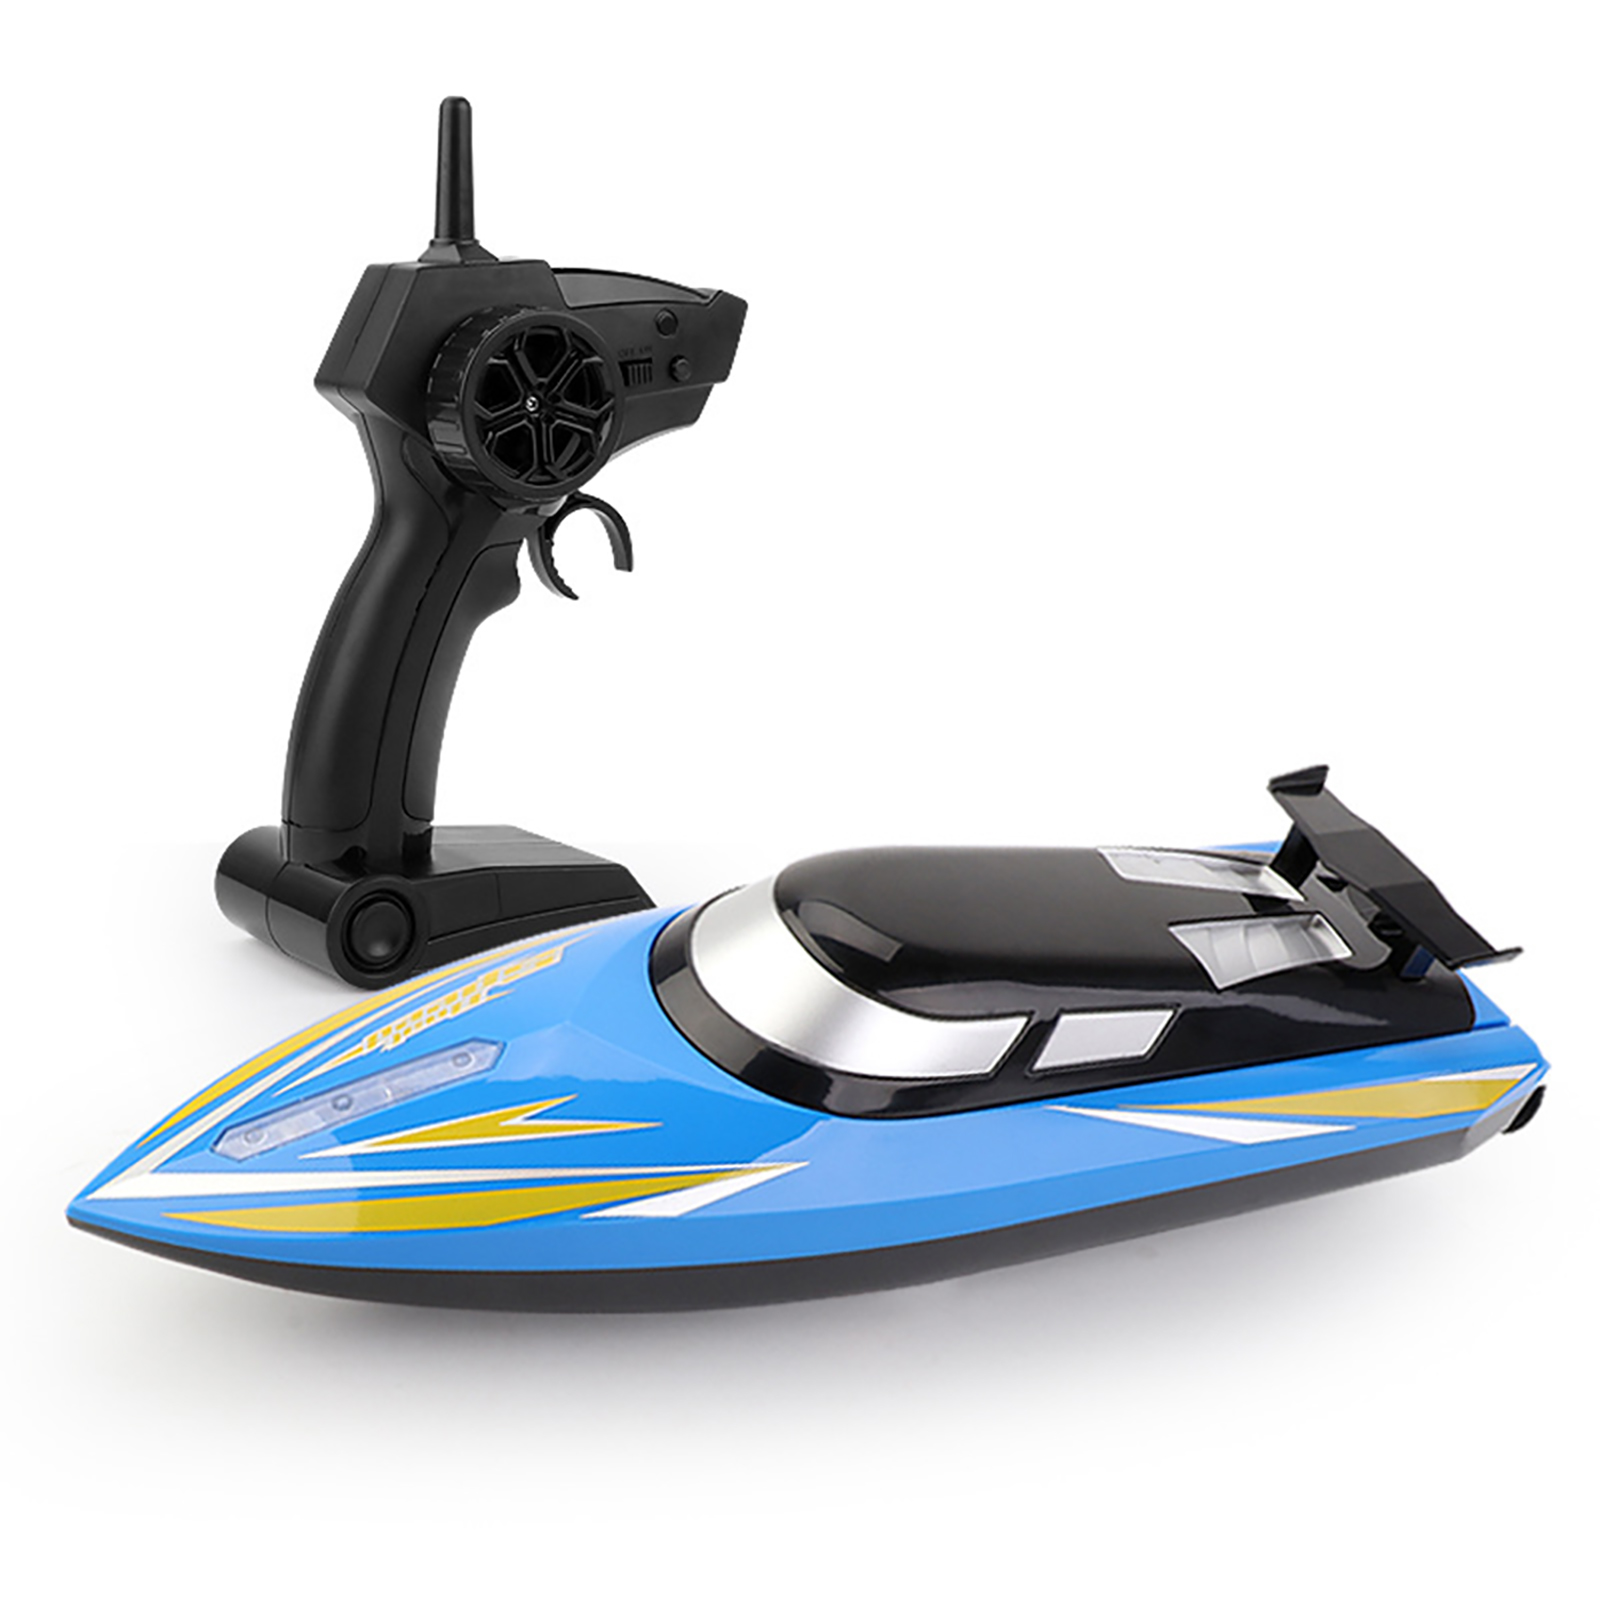 706 Remote Control Speedboat 2.4g 20km/H High Speed Dual Motor Remote Control Boat